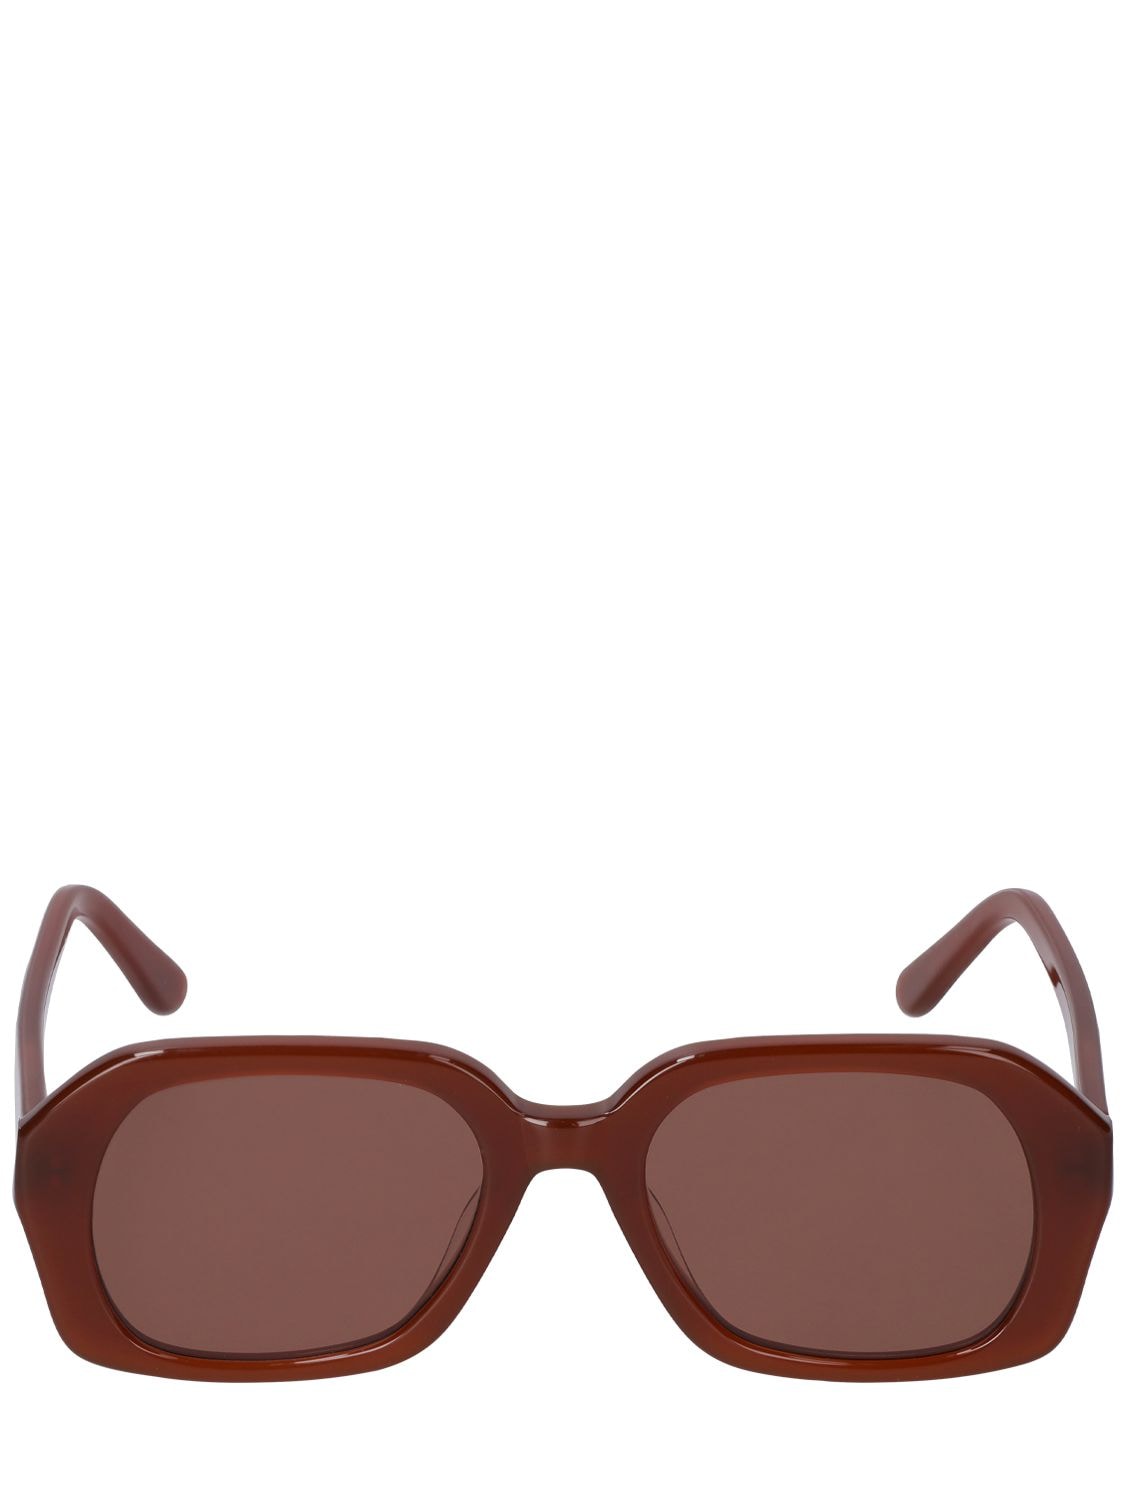 Image of Le Classique Oversize Acetate Sunglasses